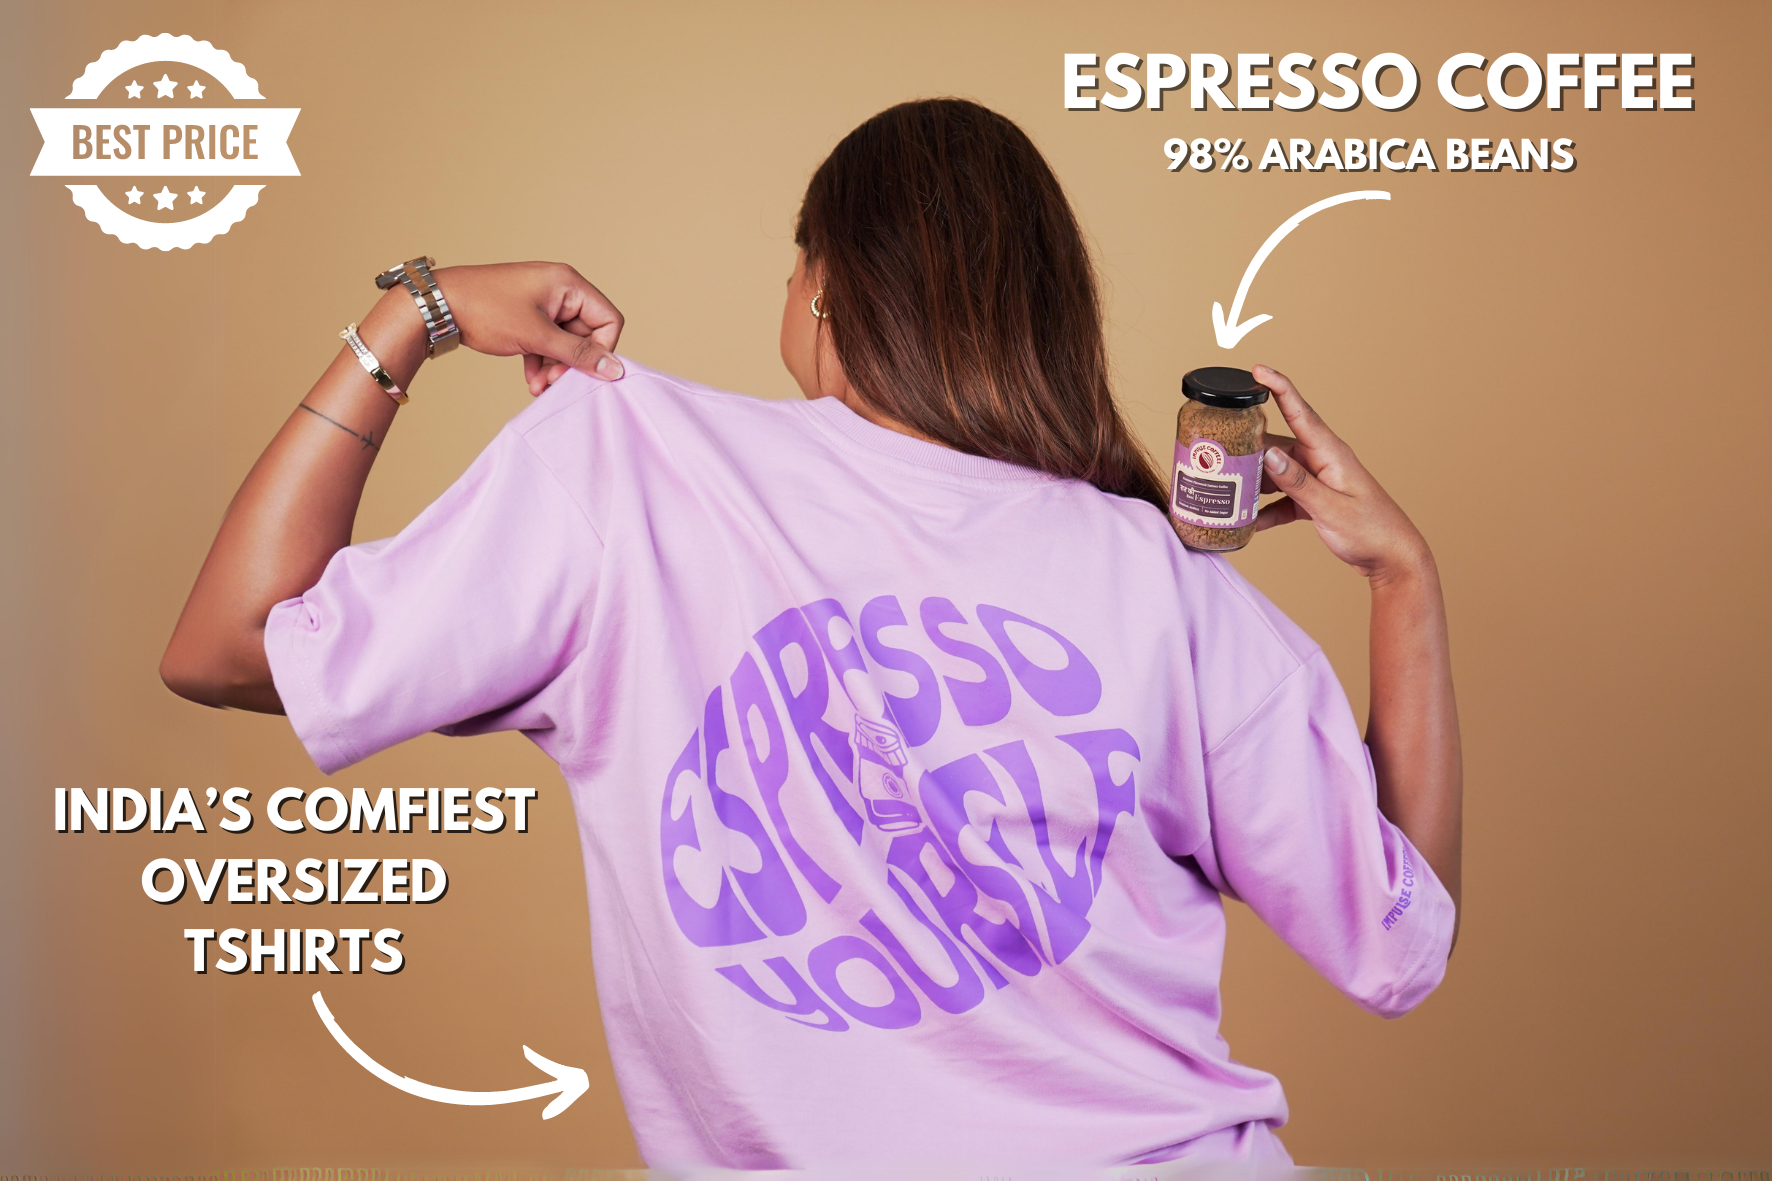 Espresso Yourself Combo | Espresso Yourself T-shirt + Raat ki Rani Espresso 50 grams